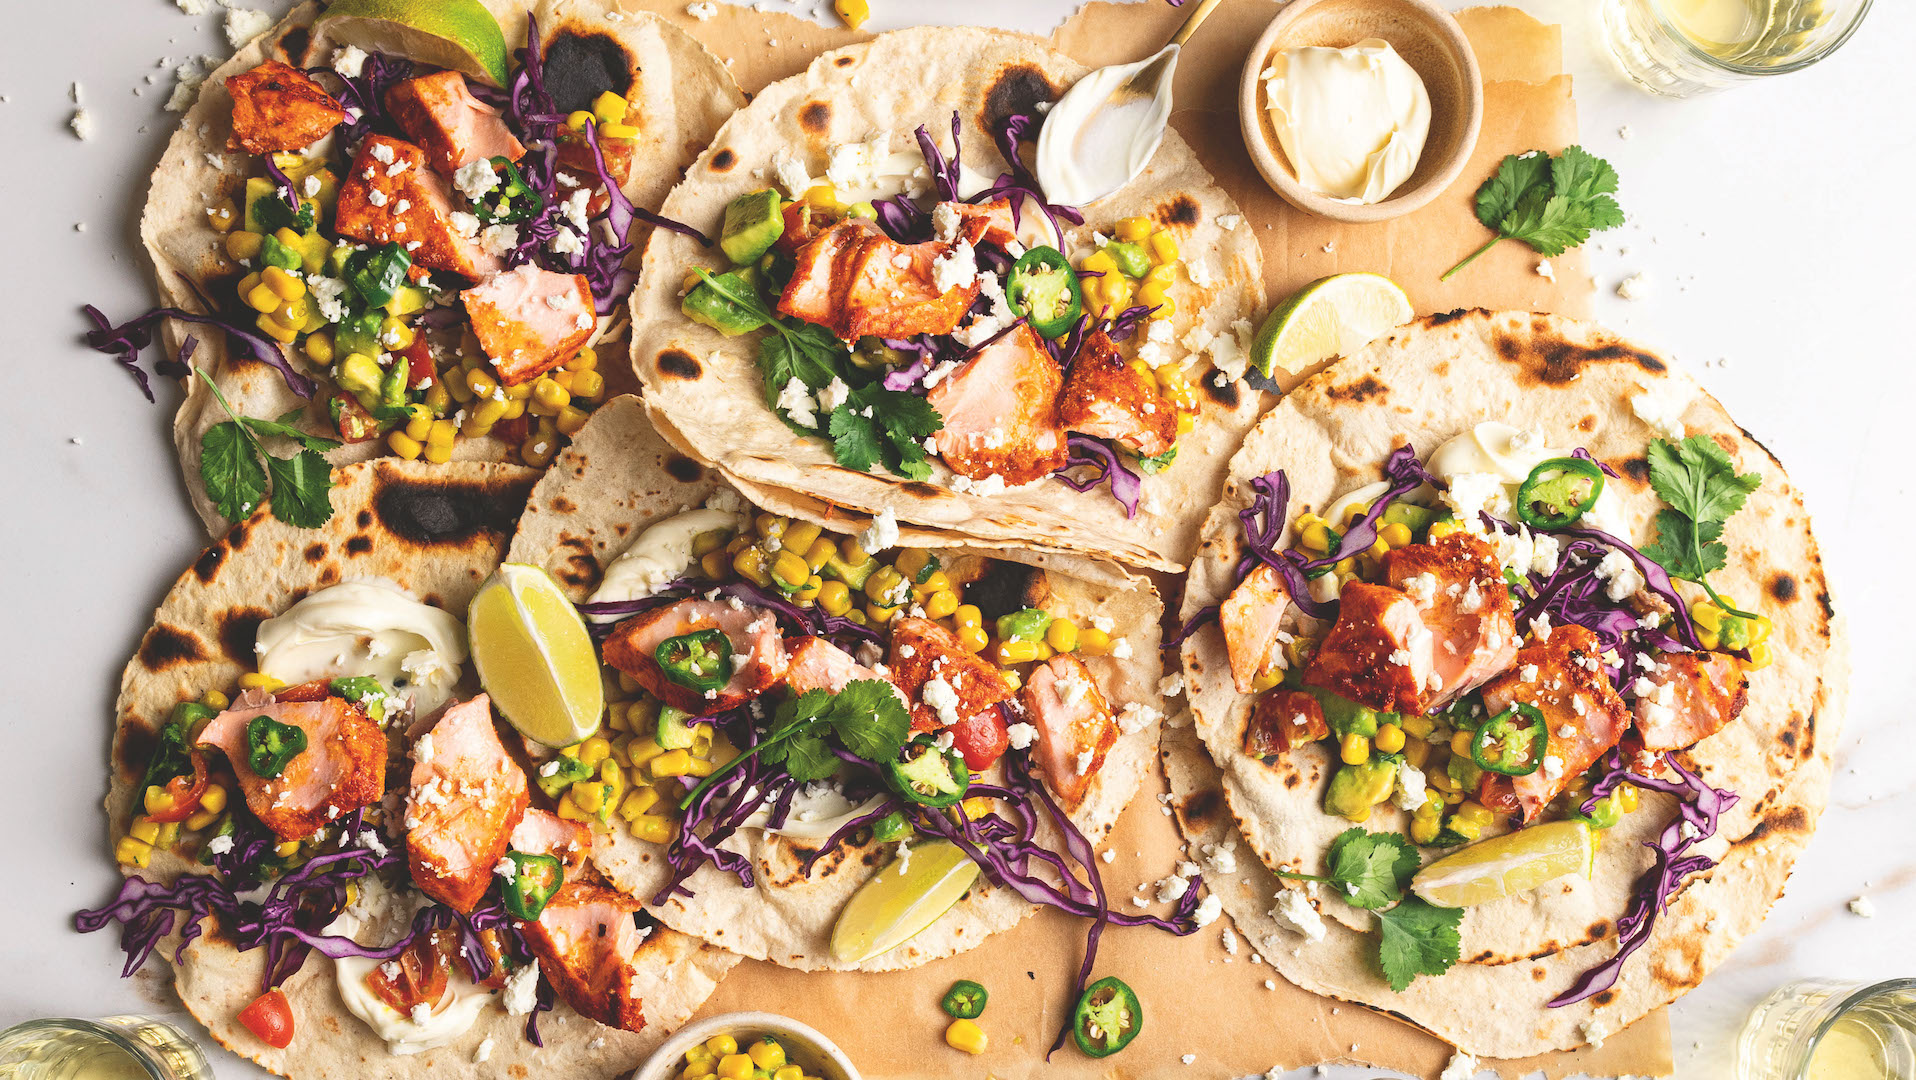 Vibrant flavours: Cajun salmon tacos made with BFree gluten-free wholegrain wraps